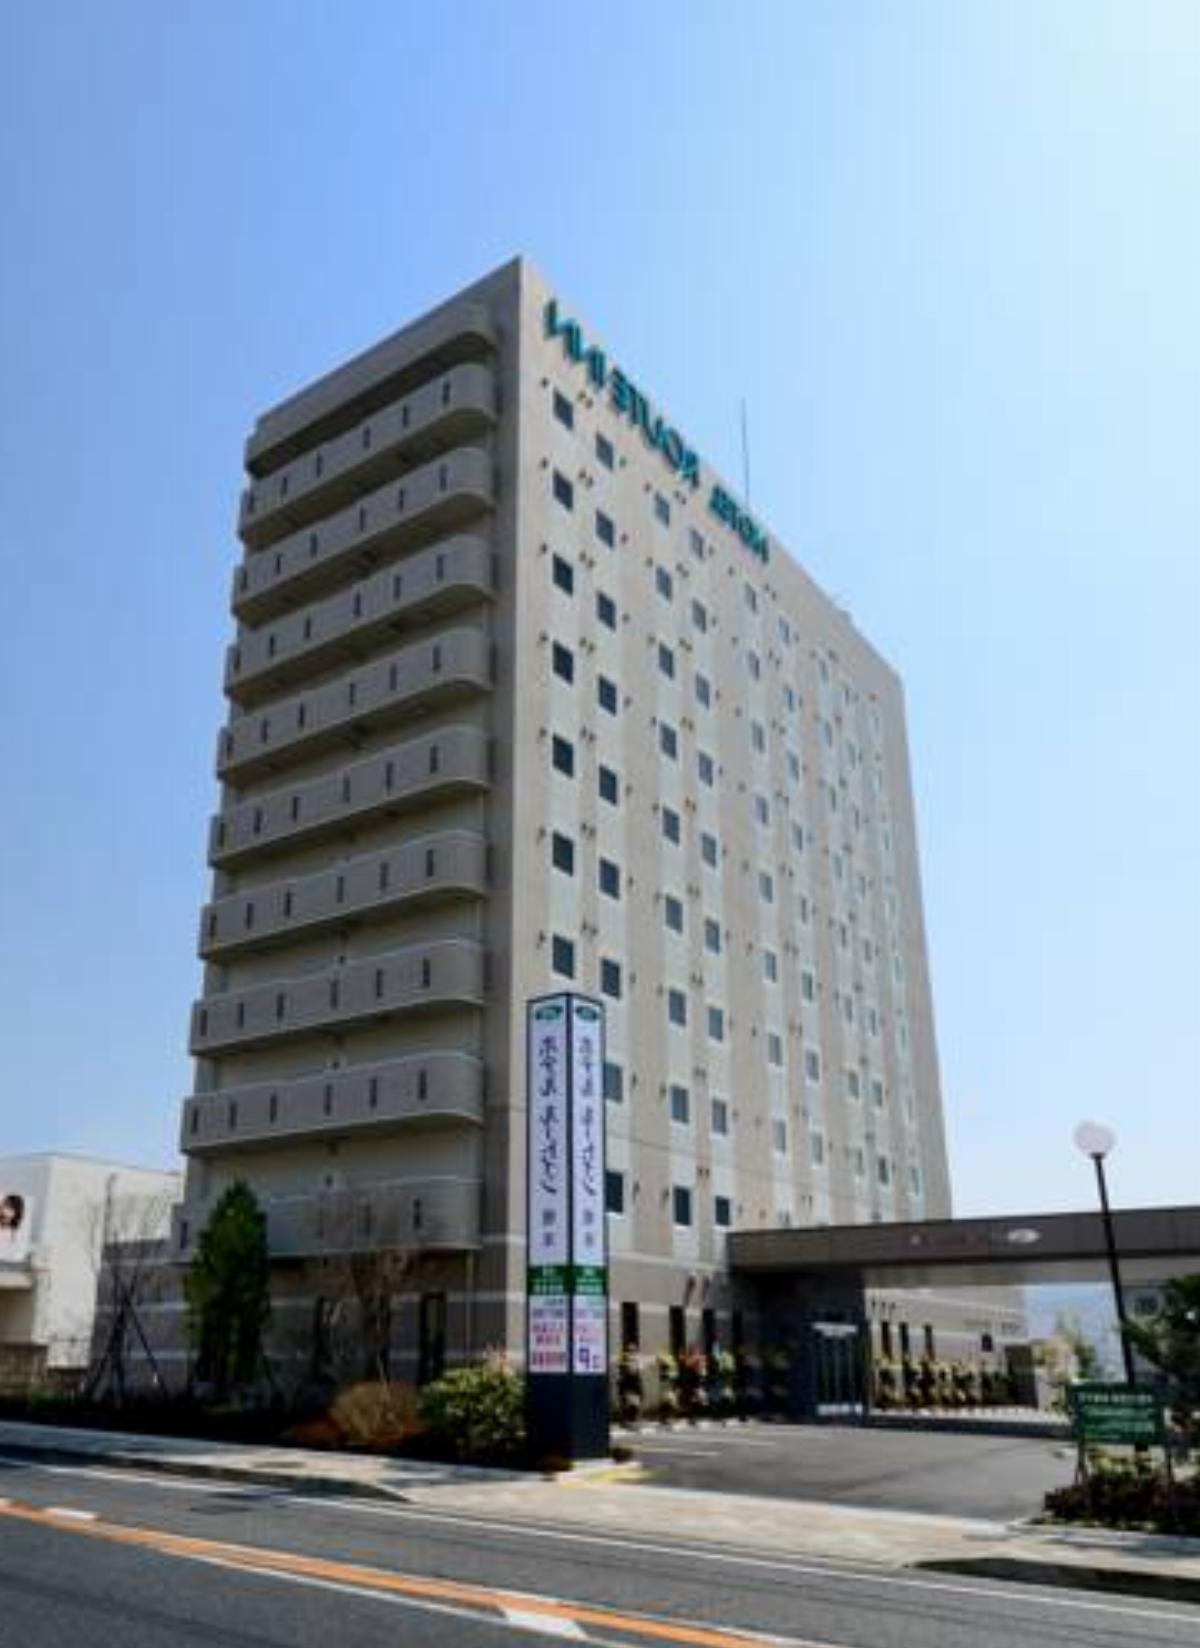 Hotel Route Inn Hashimoto Hotel Hashimoto Japan